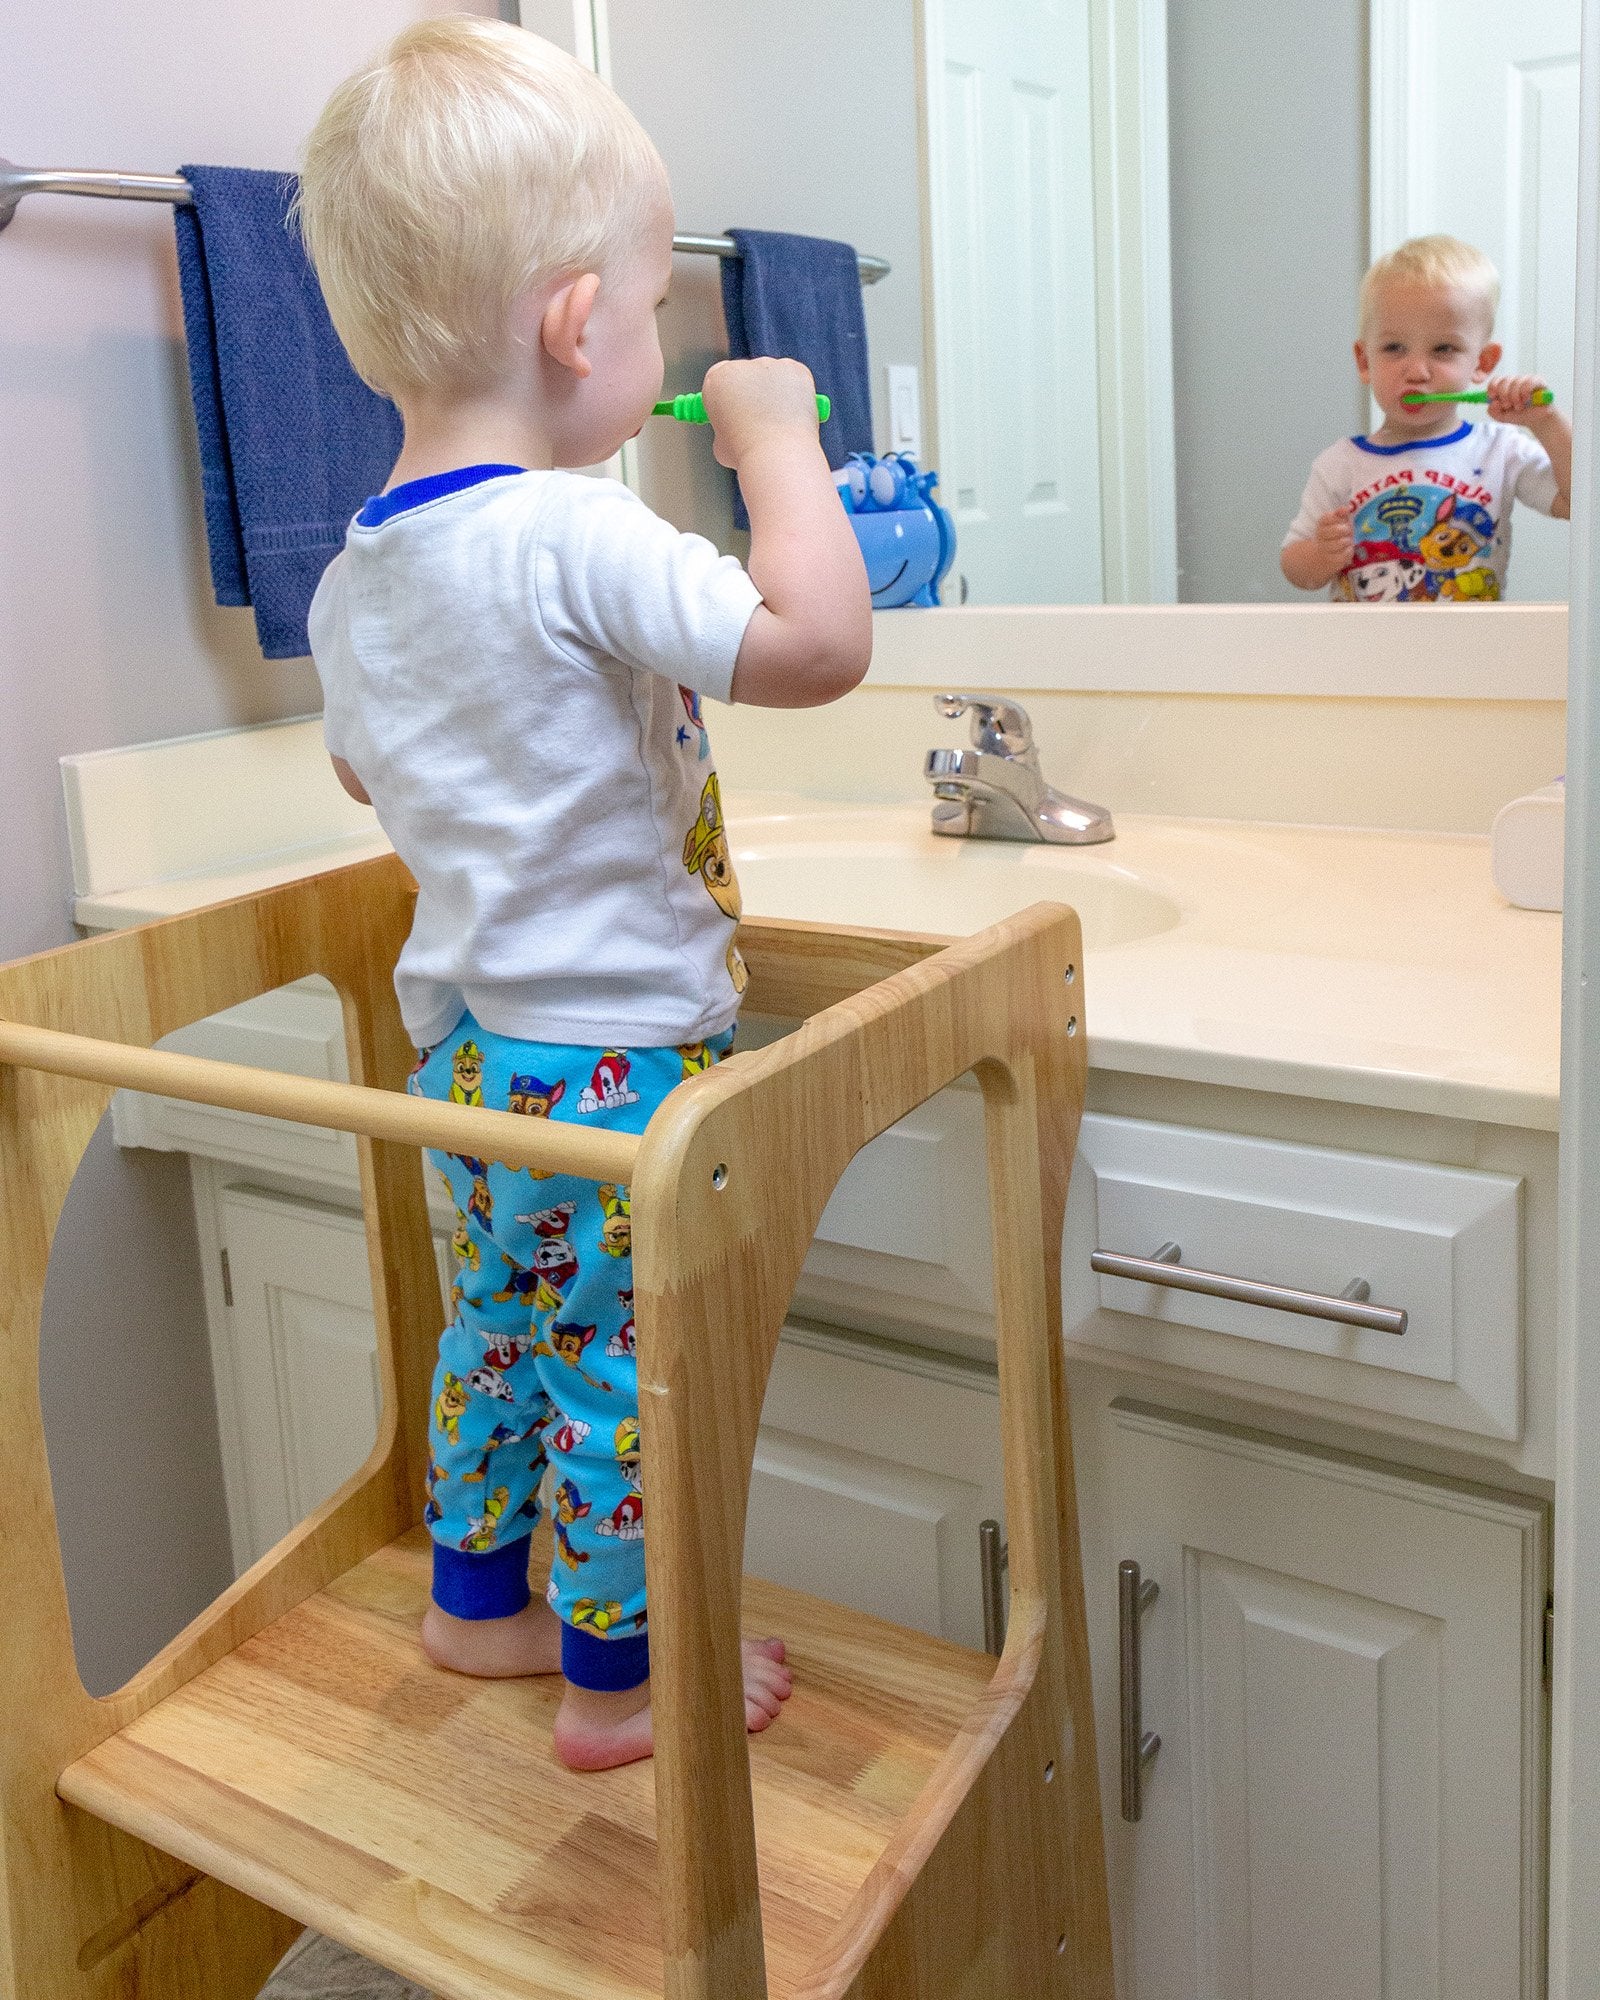 Plastic Dual Step Up Stool Children Kids Ladders Kitchen Toilet